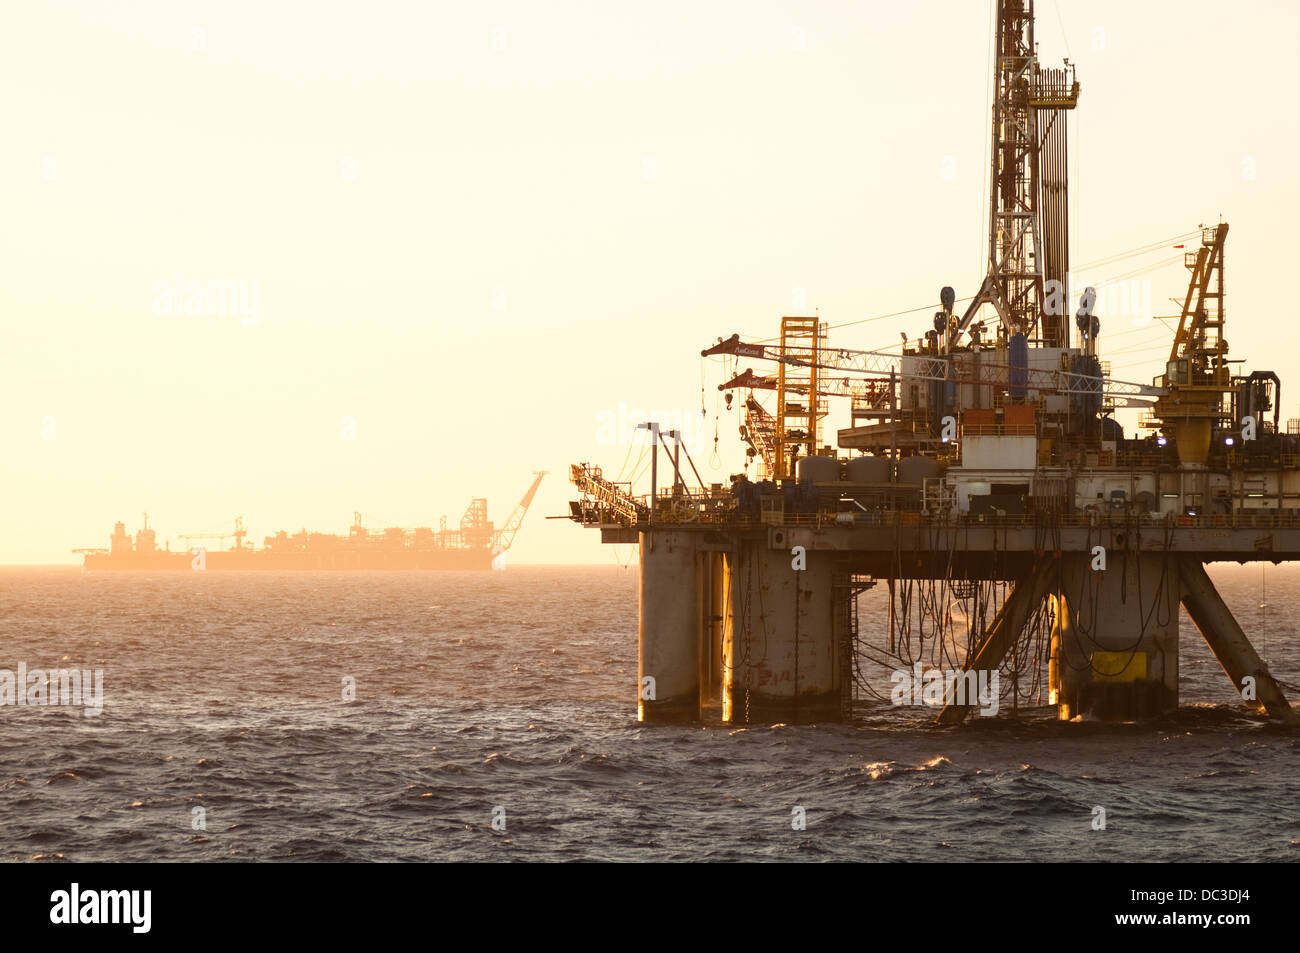 Ölbohrungen Bohrinseln Offshore-Ölfeld Campos-Becken Rio De Janeiro, Brasilien Stockfoto